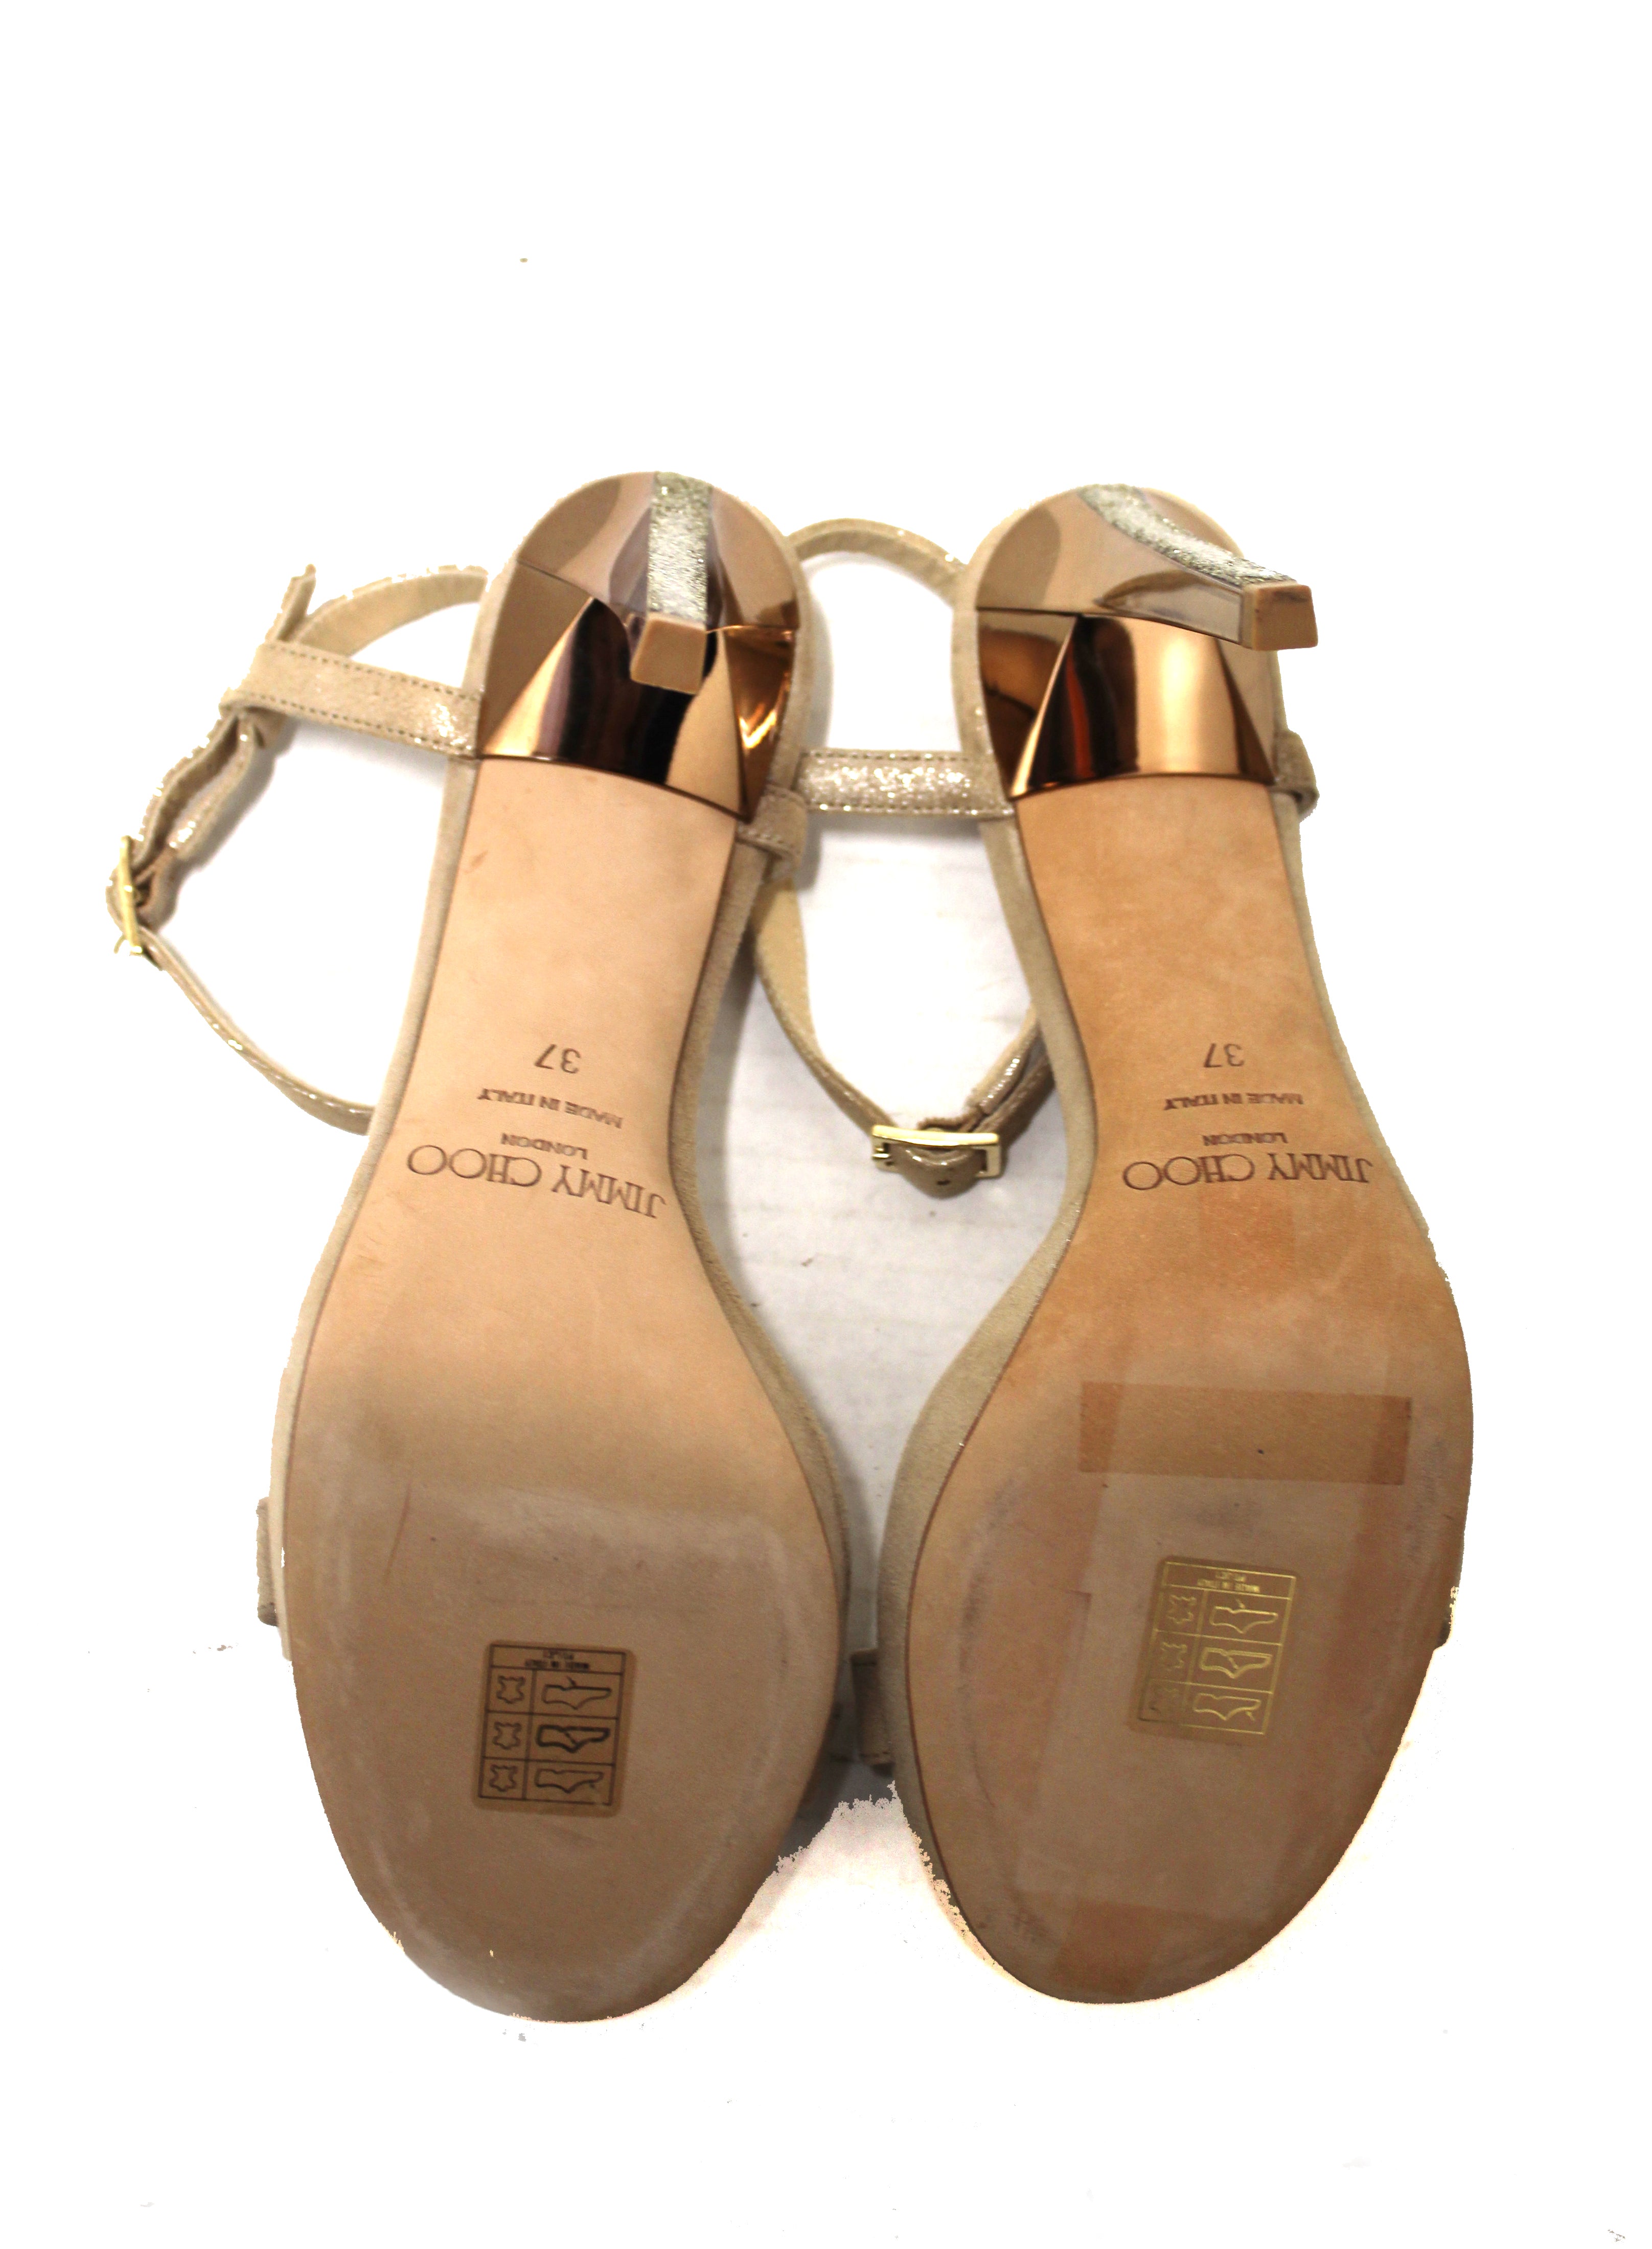 Authentic Jimmy Choo Champagne Gold Glitter Pandora Pump Heel Sandal Size 37